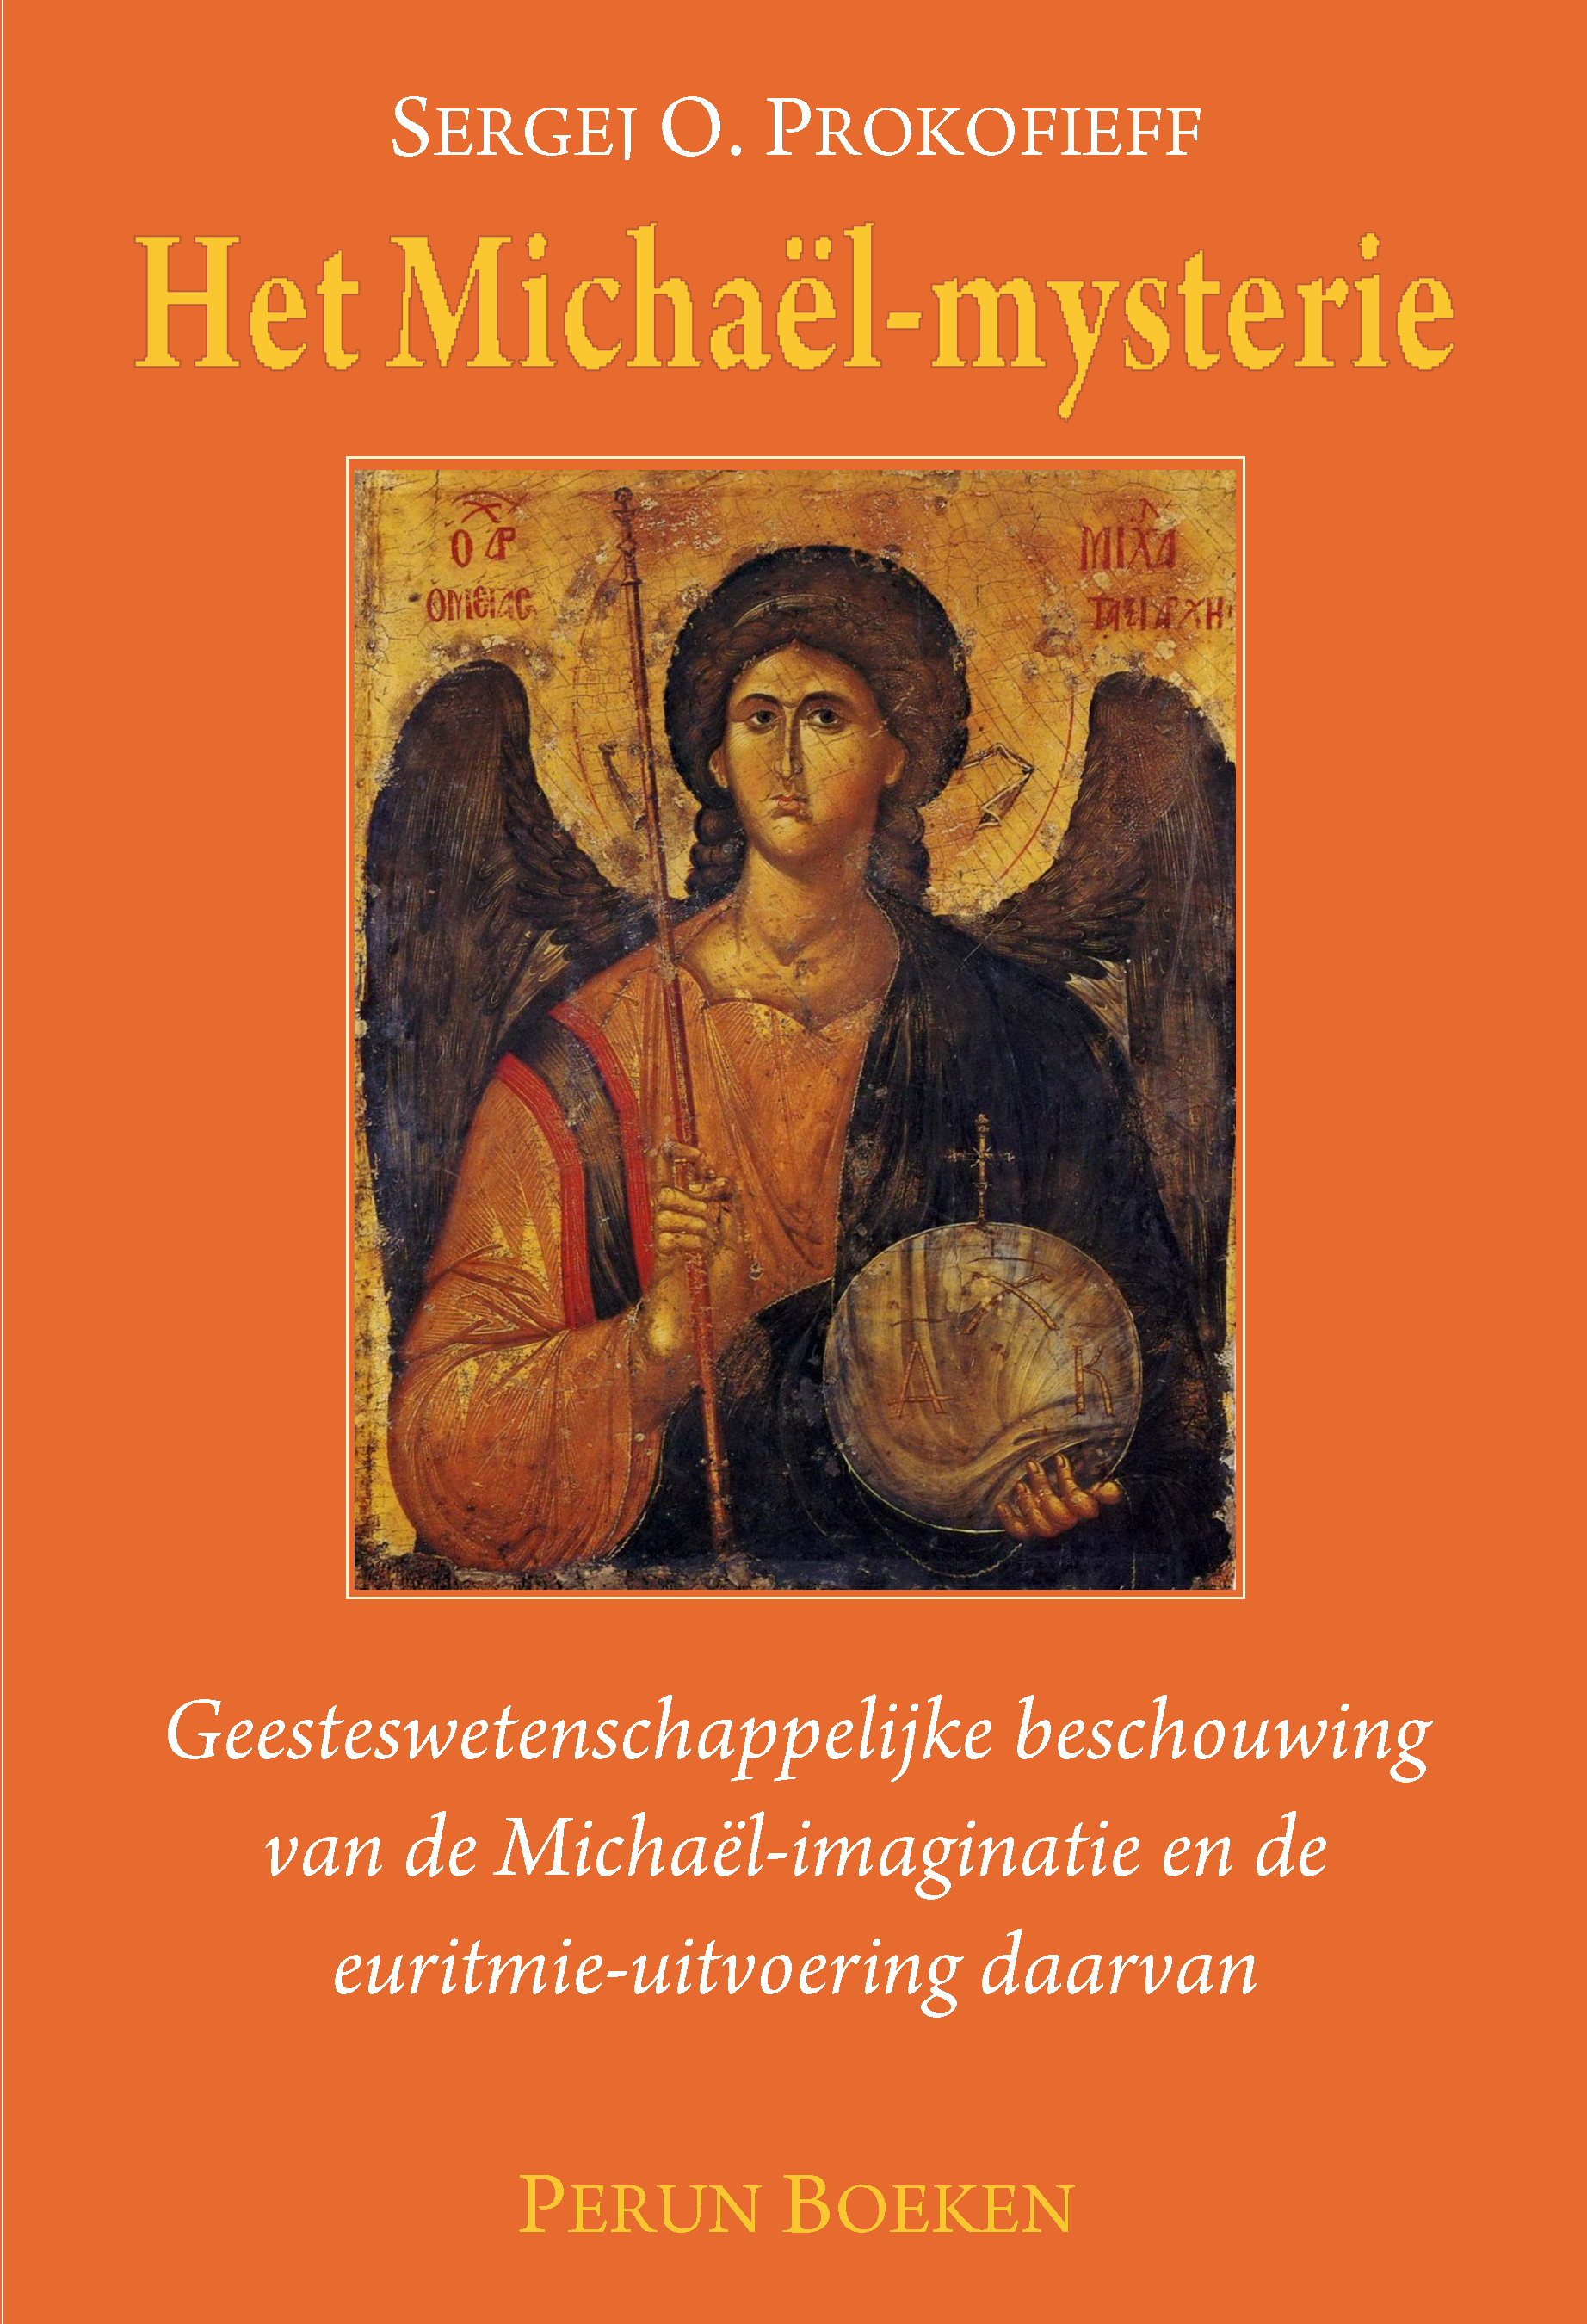 Omslag Michaël-mysterie - Byzantium - Werner - donker oranje - voorzijde